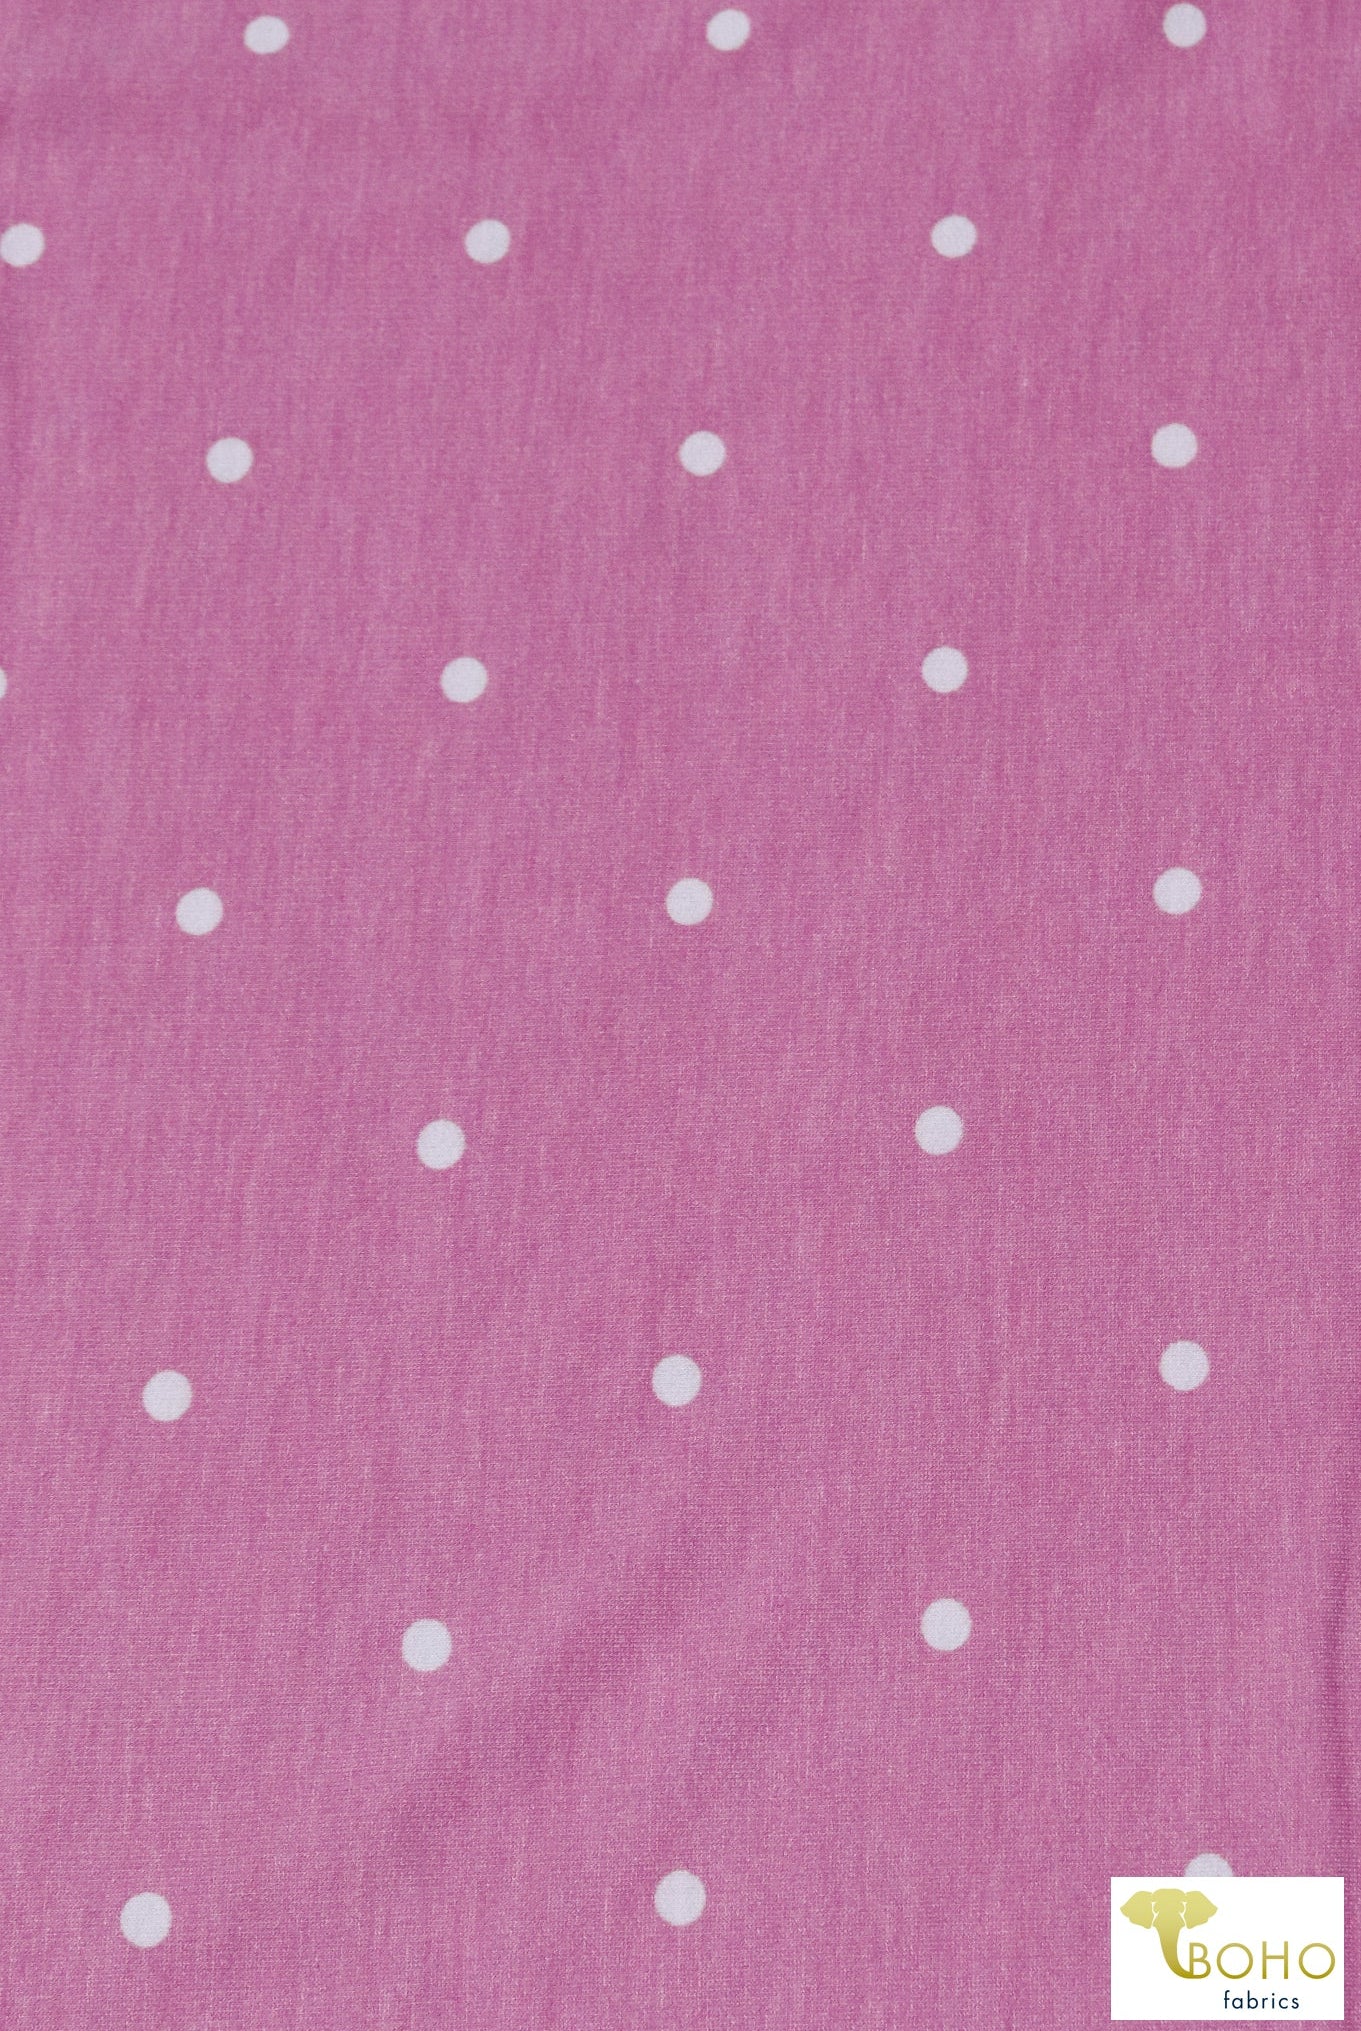 Last Cuts! Polka Dots on Pink, French Terry Knit Print. FTP-328 - Boho Fabrics